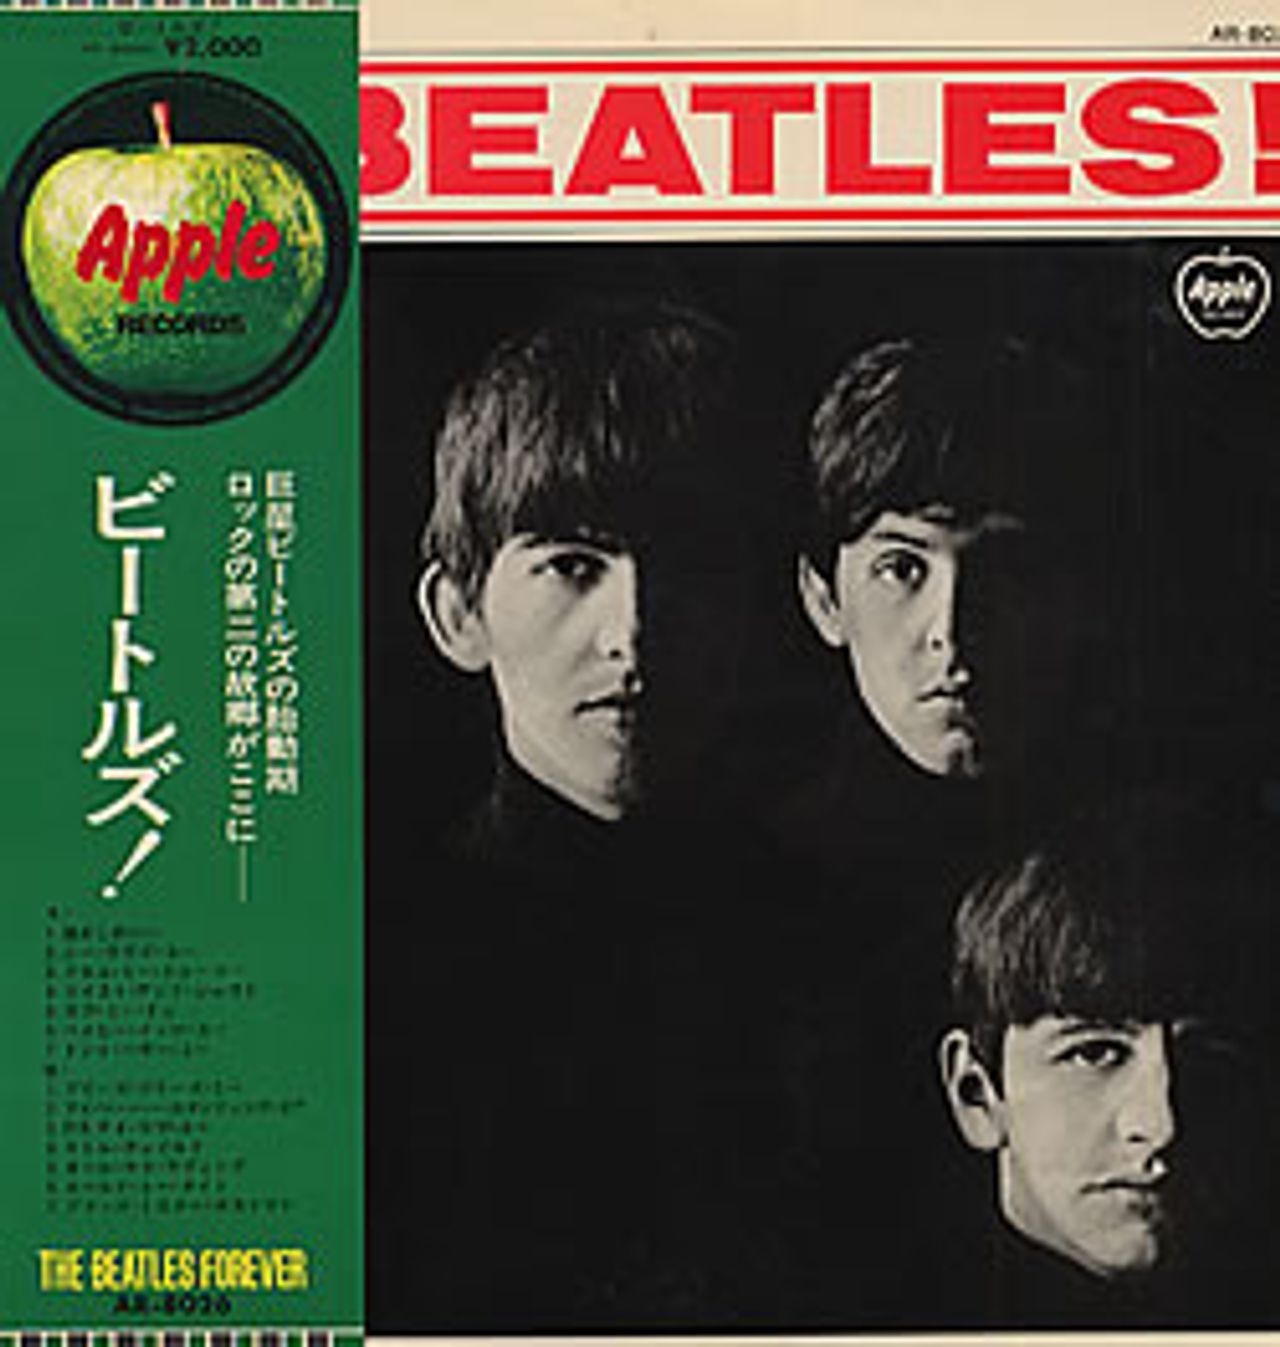 The Beatles Meet The Beatles Version) - 3rd Apple Japanese —